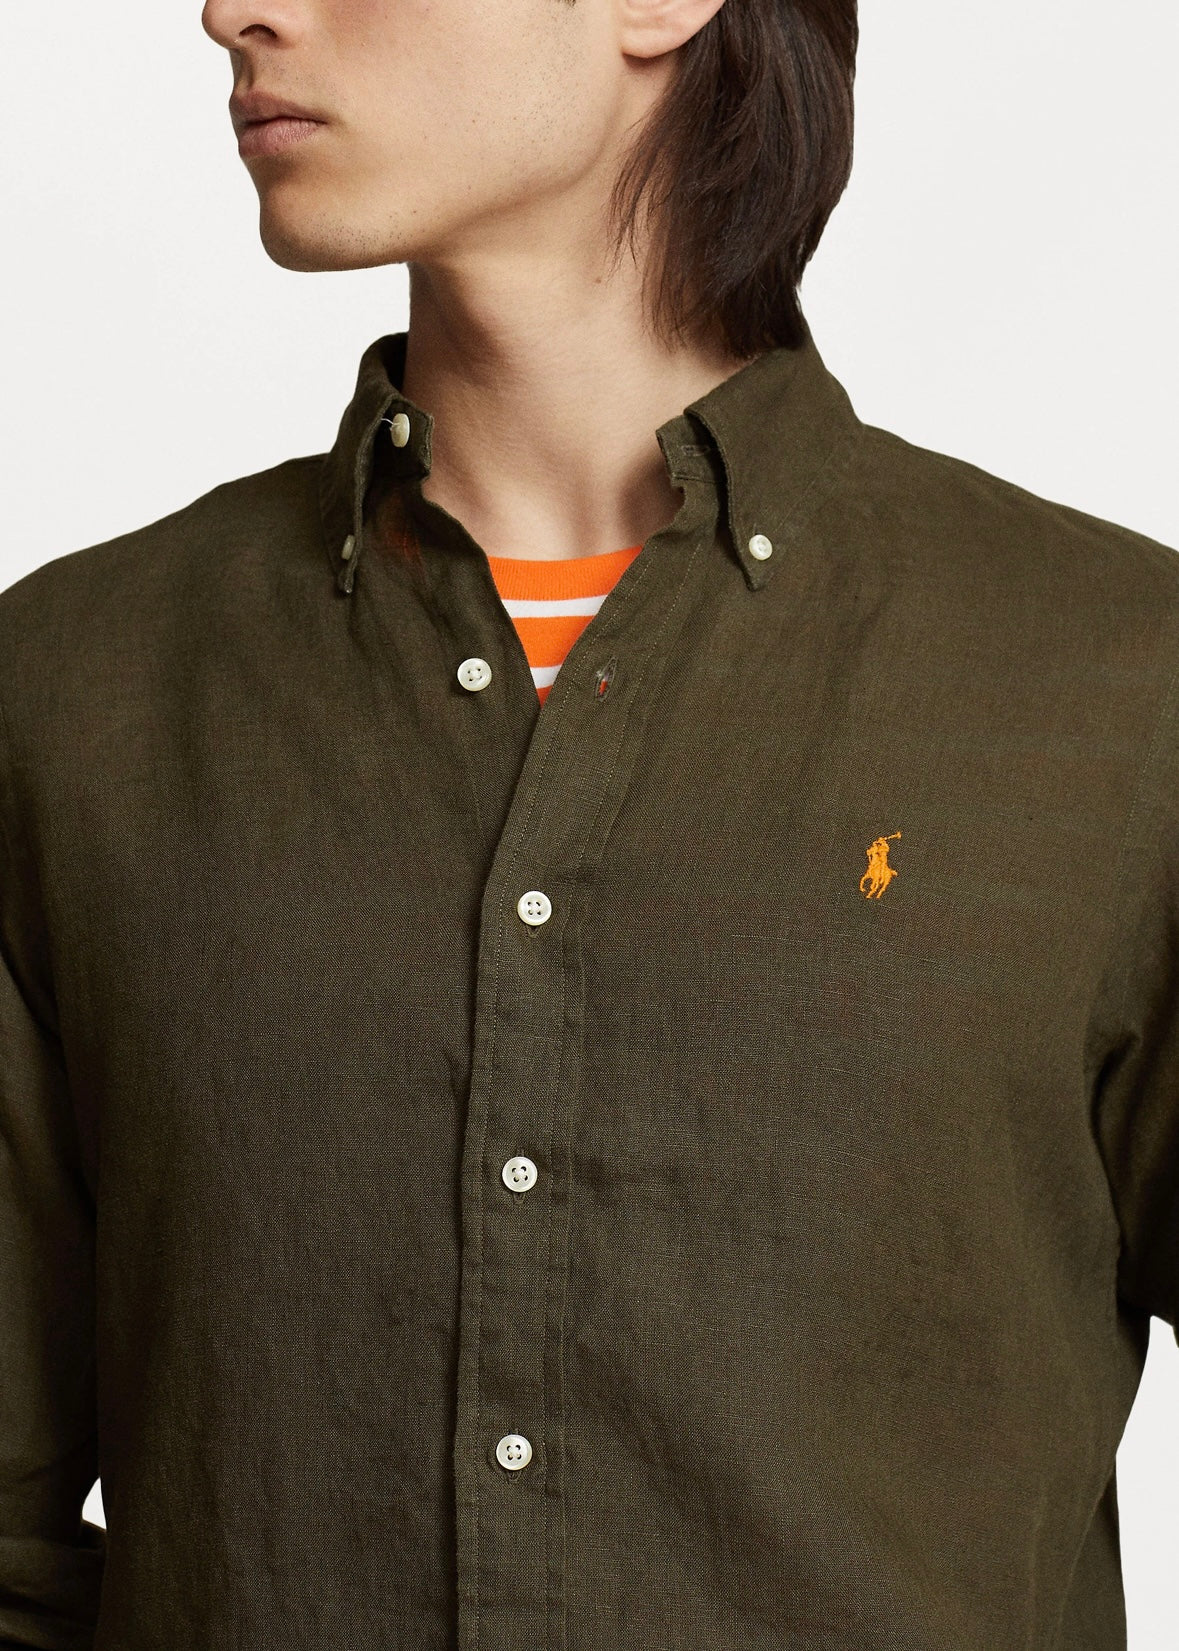 Polo Ralph Lauren Linen shirt custom fit - Armadillo